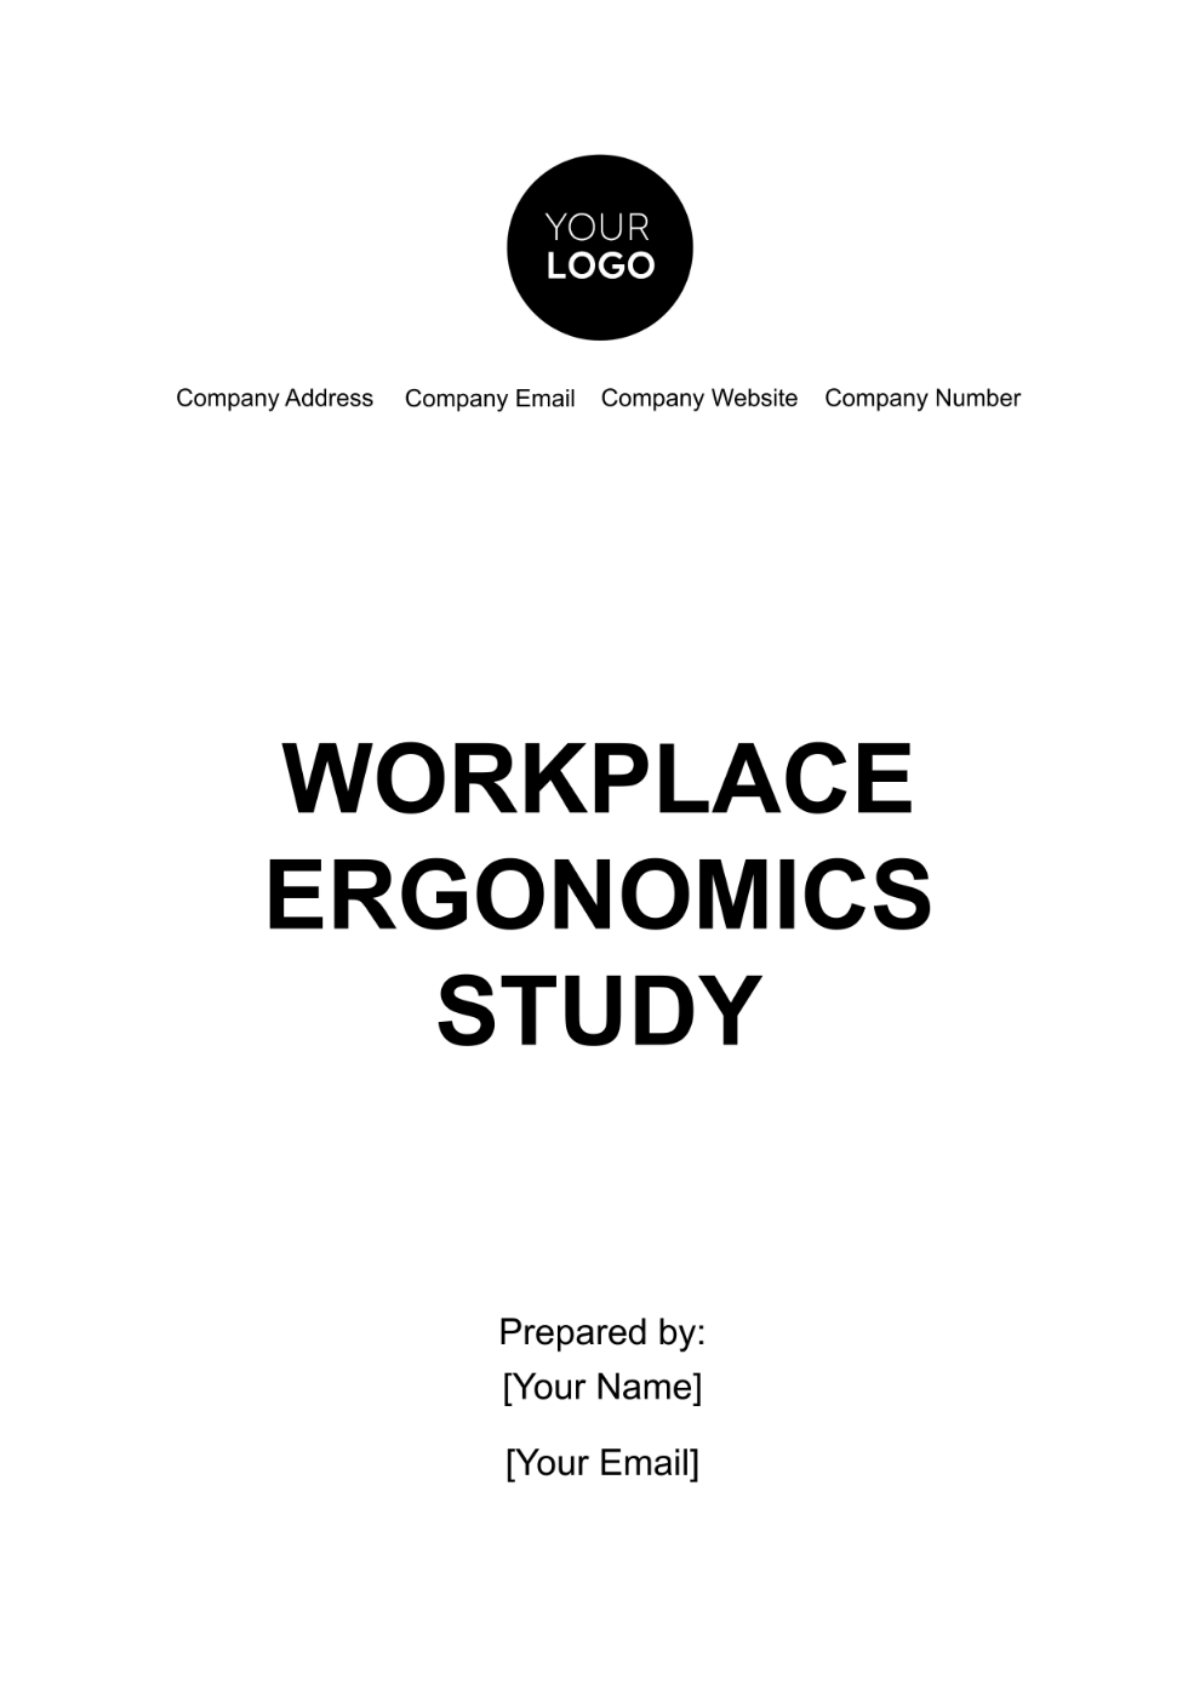 Workplace Ergonomics Study Template